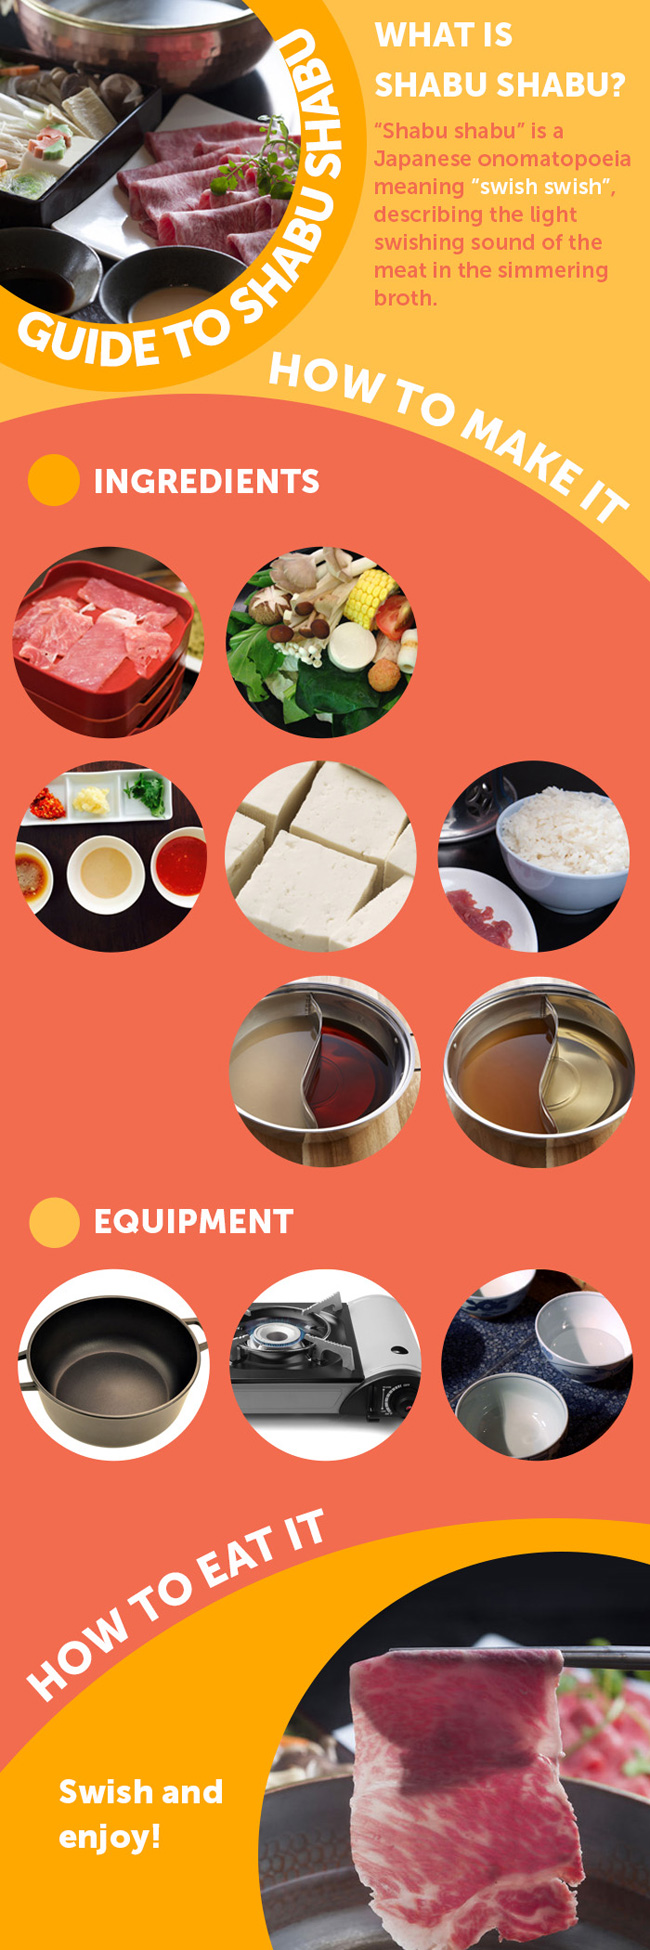 Shabu Shabu - Complete Guide To Traditional Japanese Hot Pot